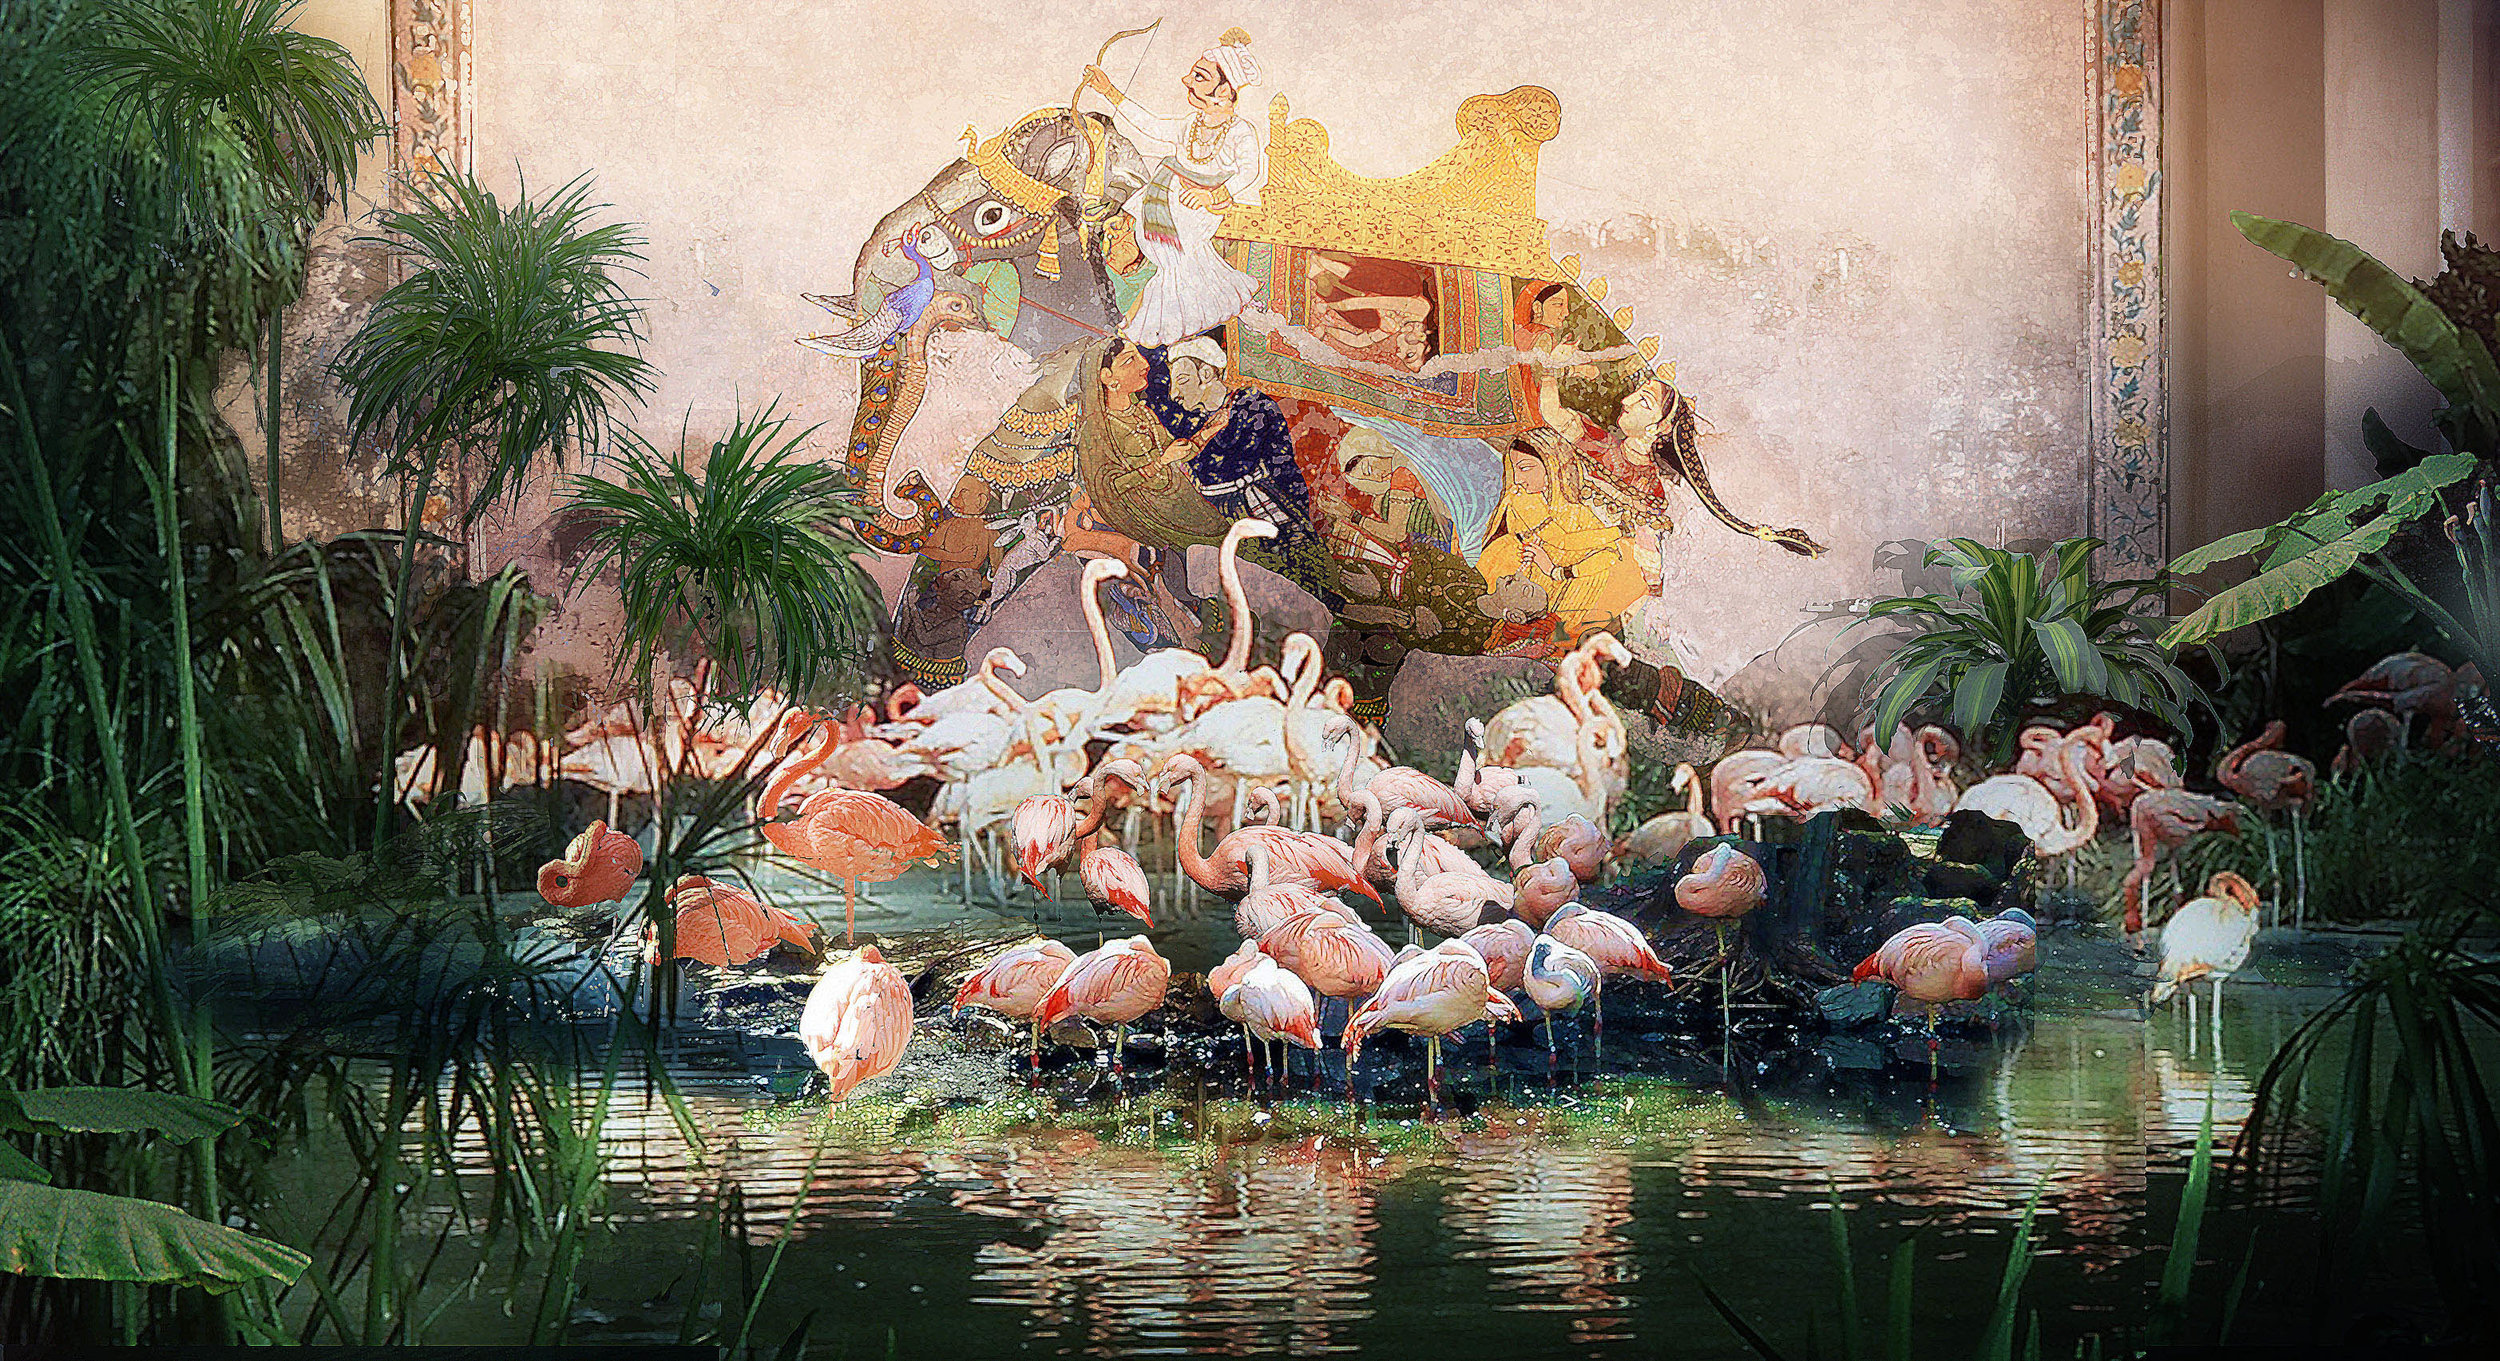 Illustration of Flamingo Exhibit